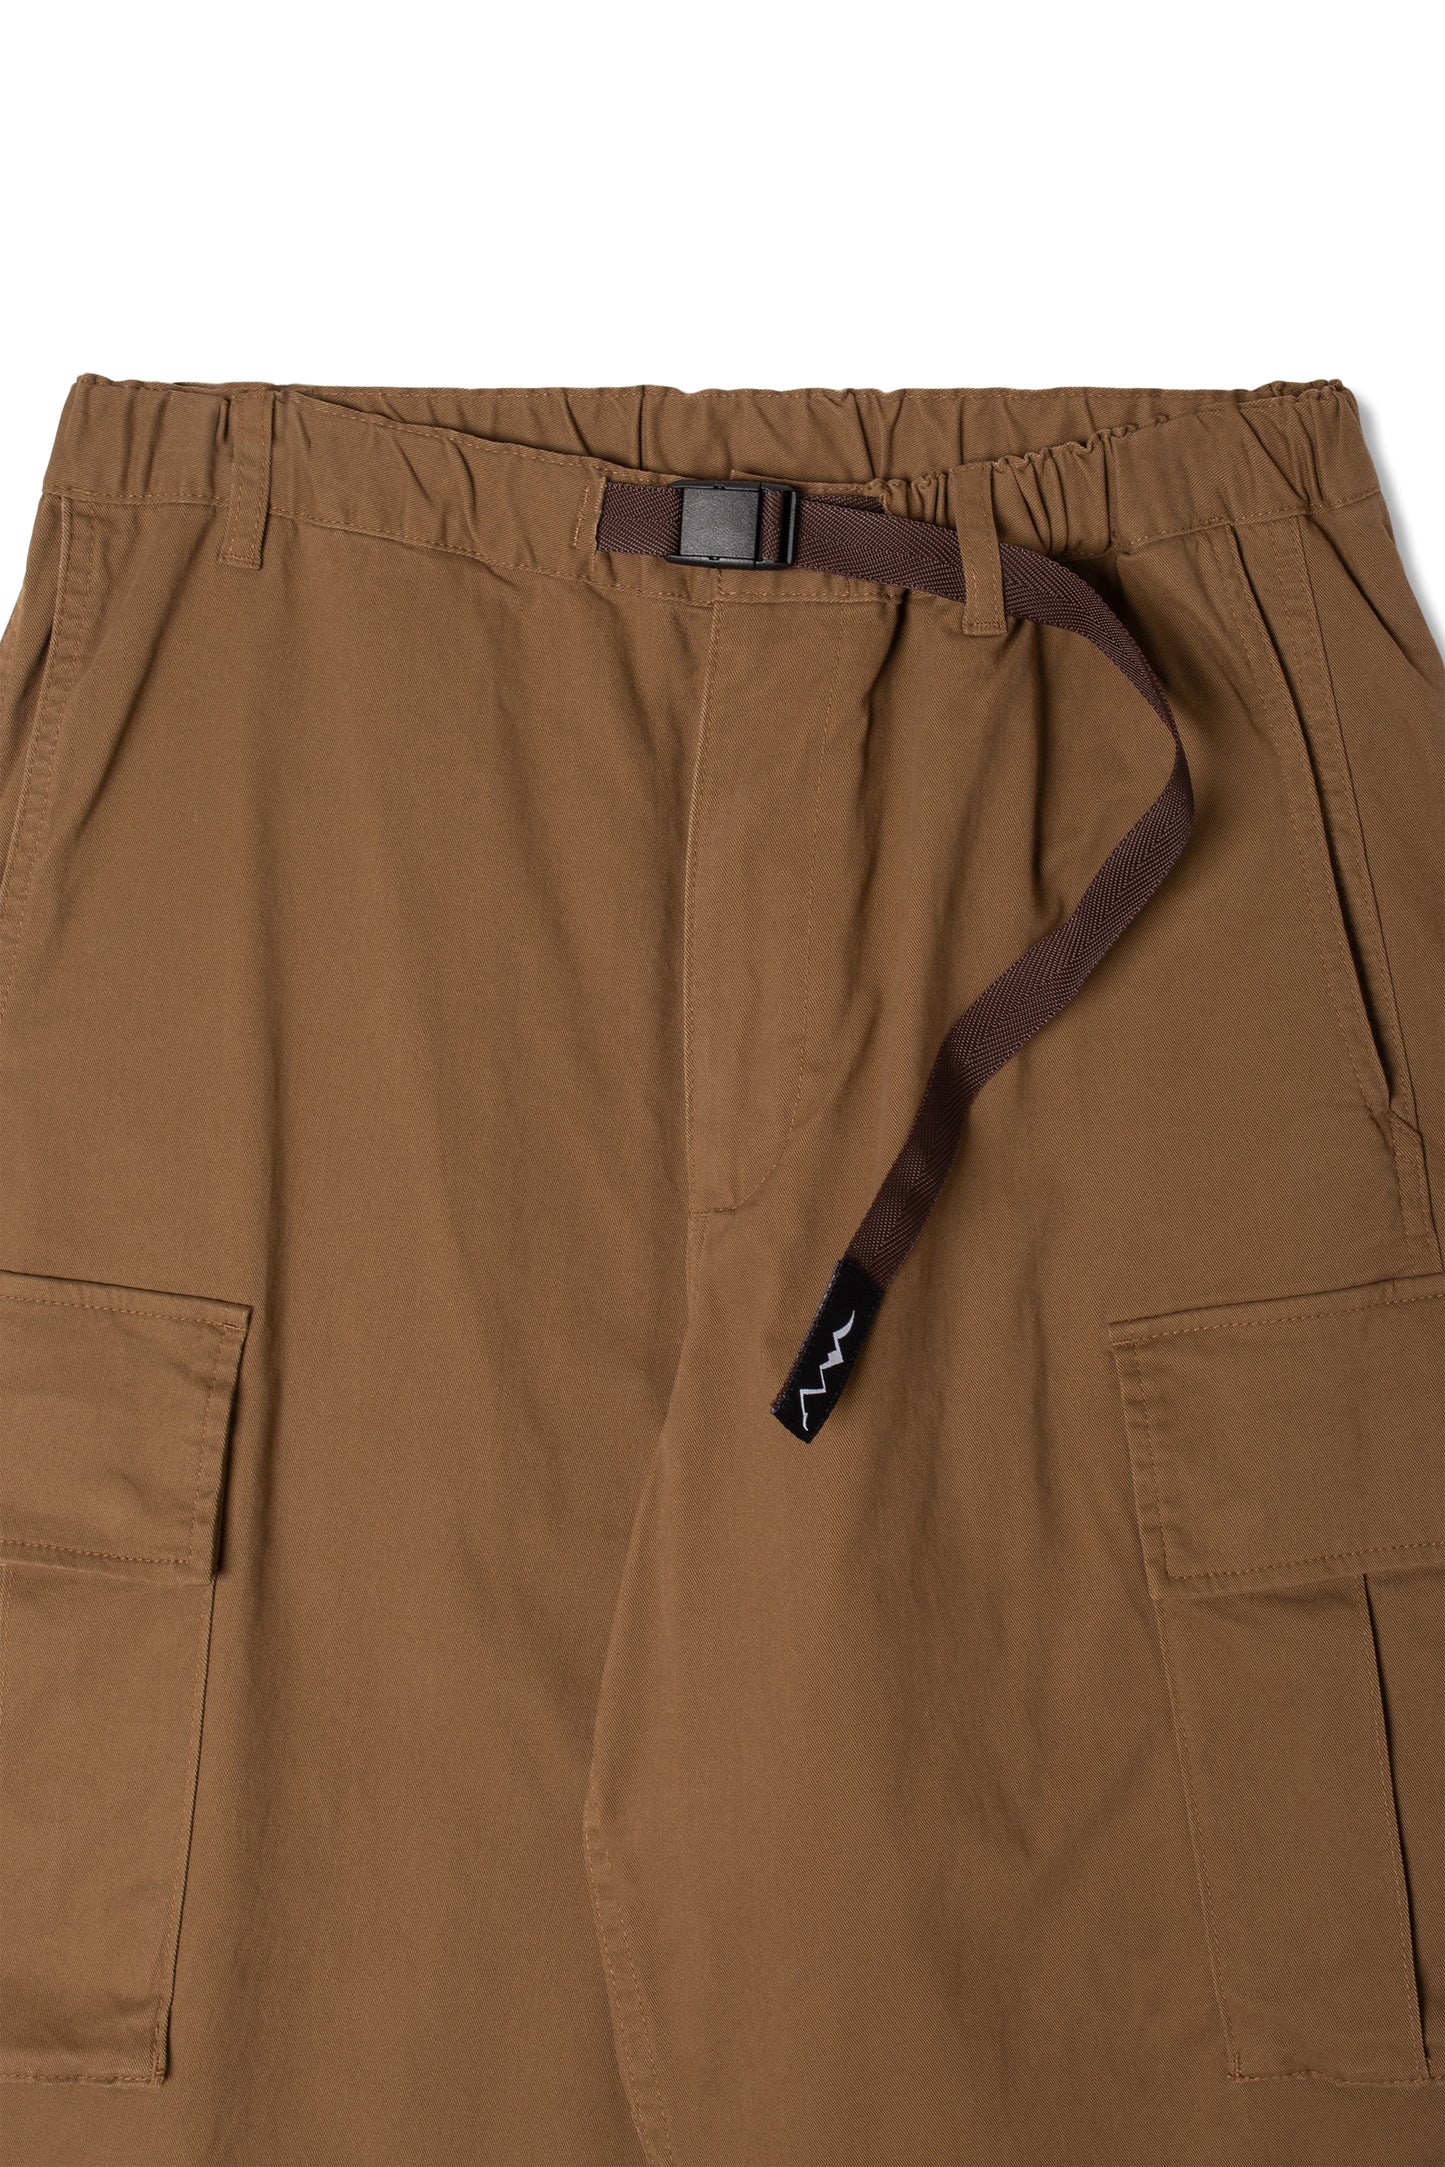 Flex Climber Cargo Pant (Brown)